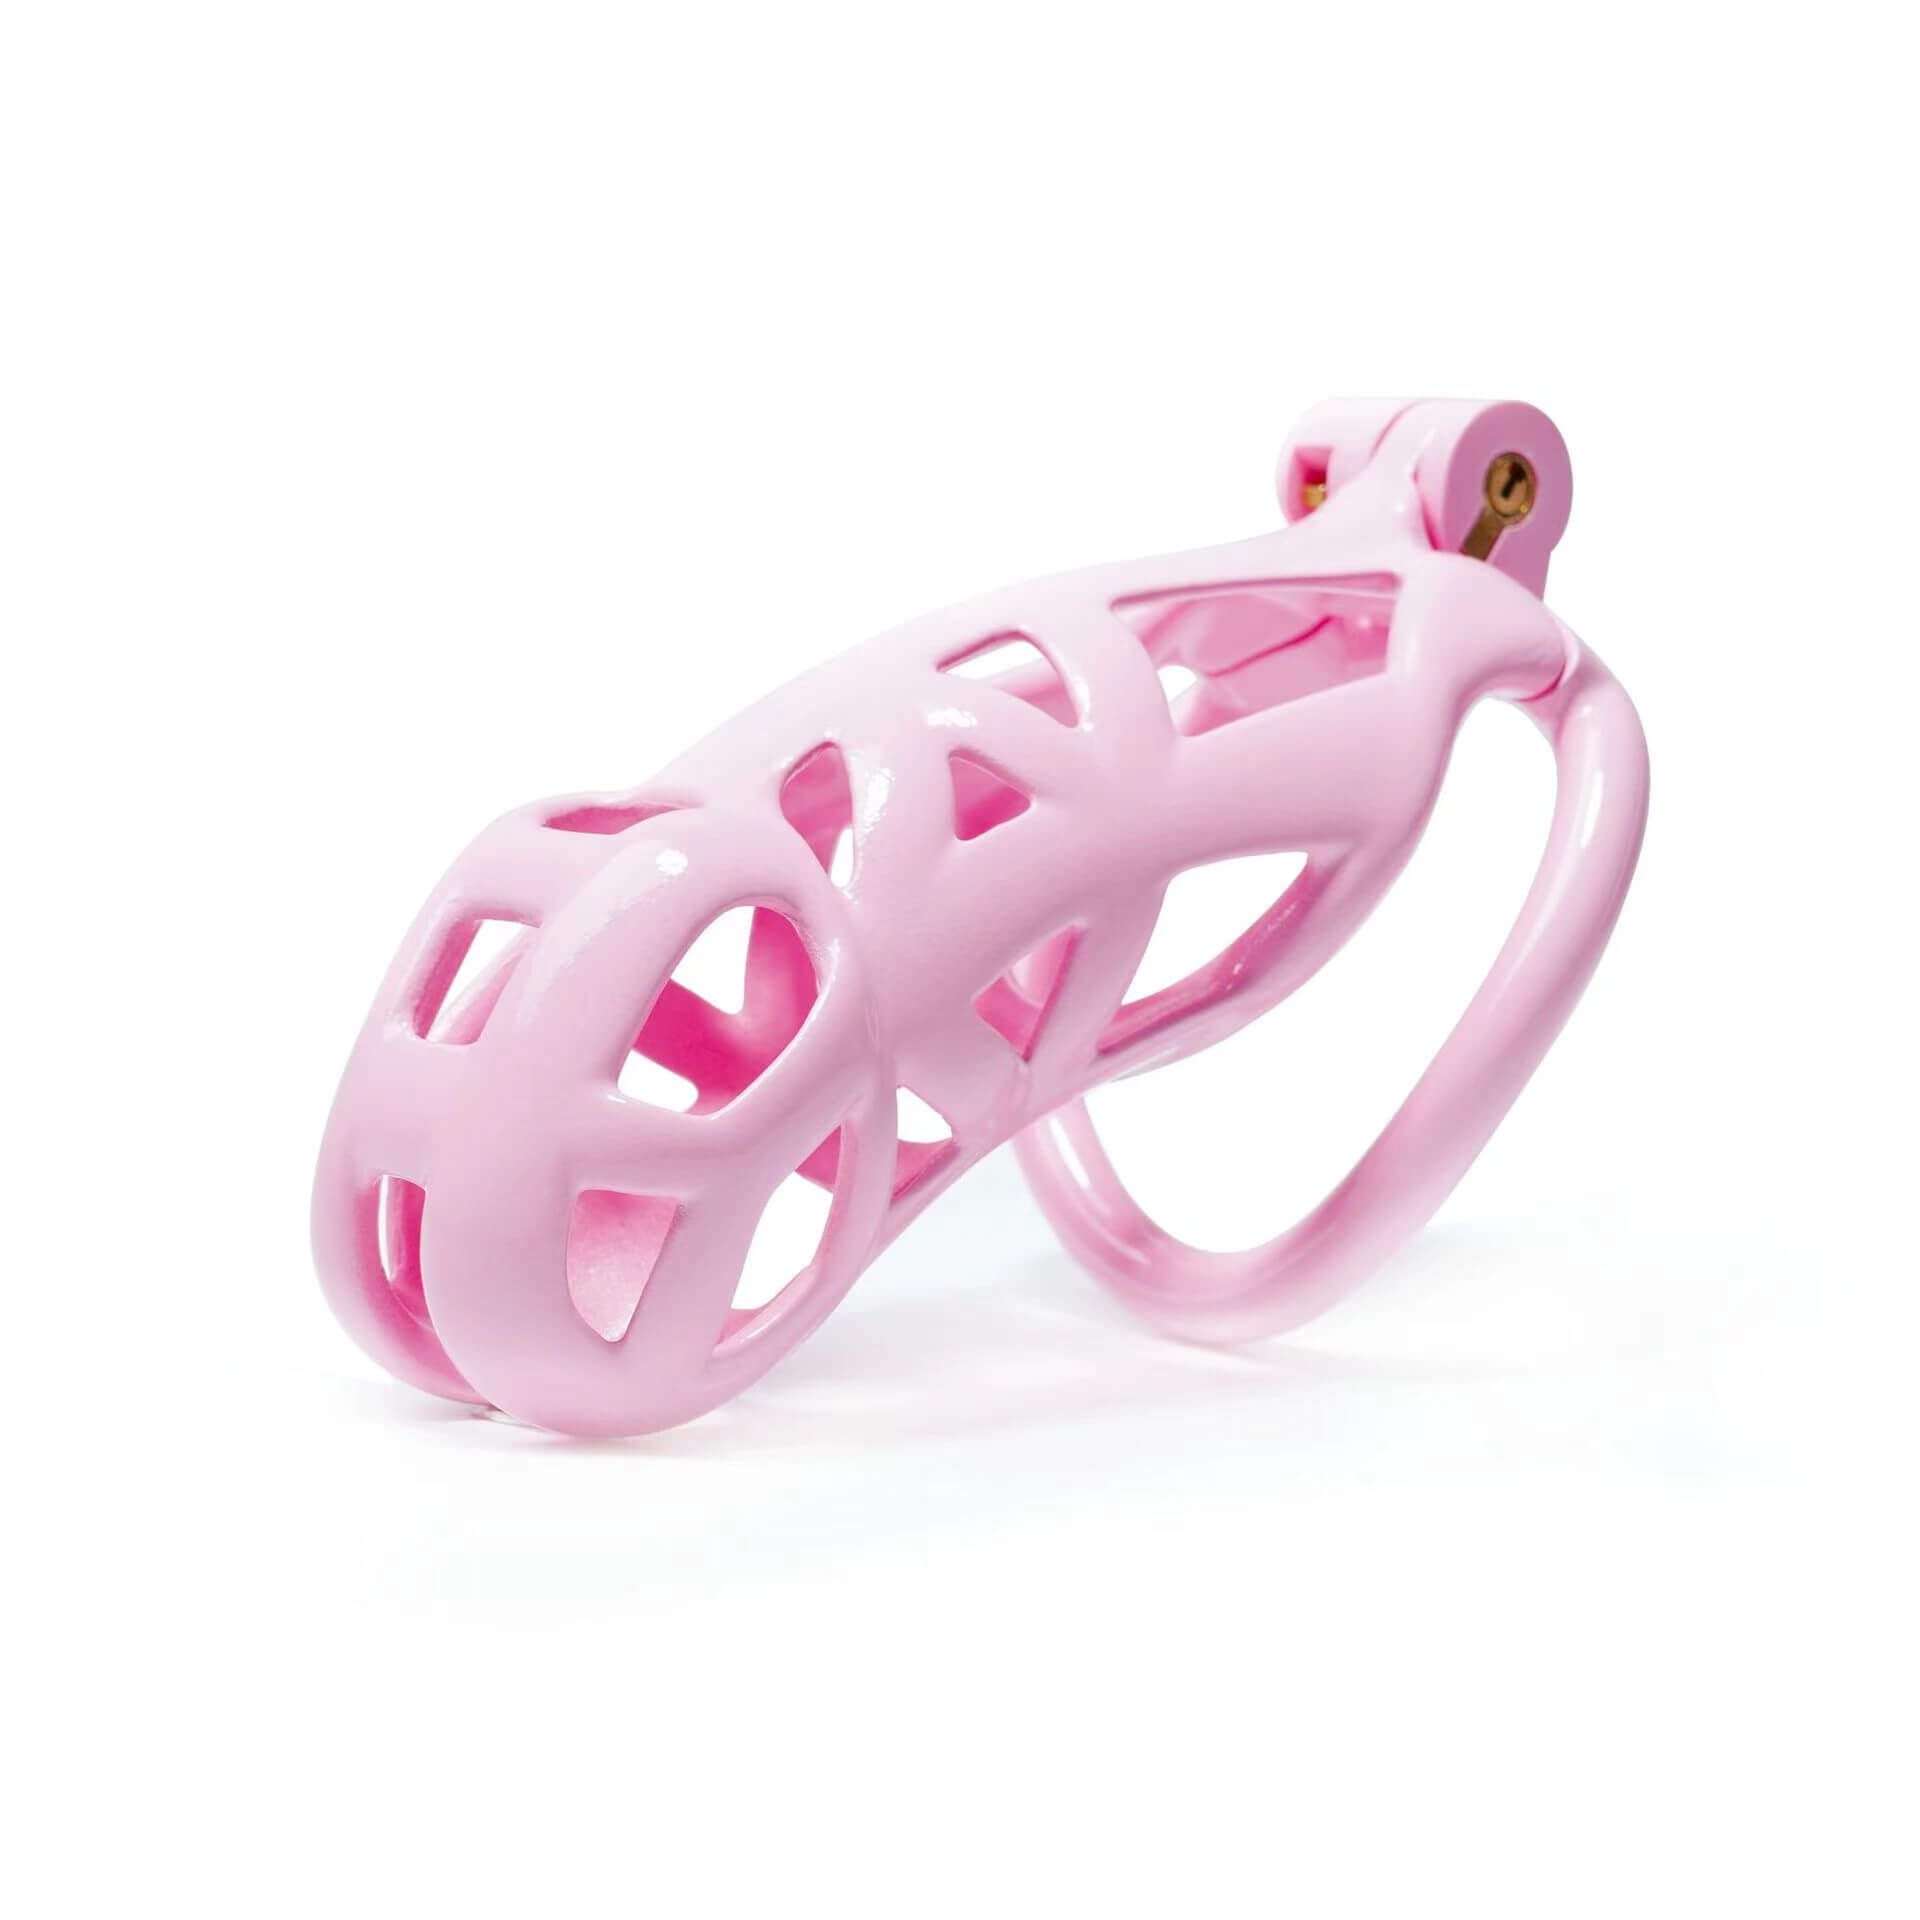 Maxi Pink Cobra Male Chastity Cage Kits – cobrachastity